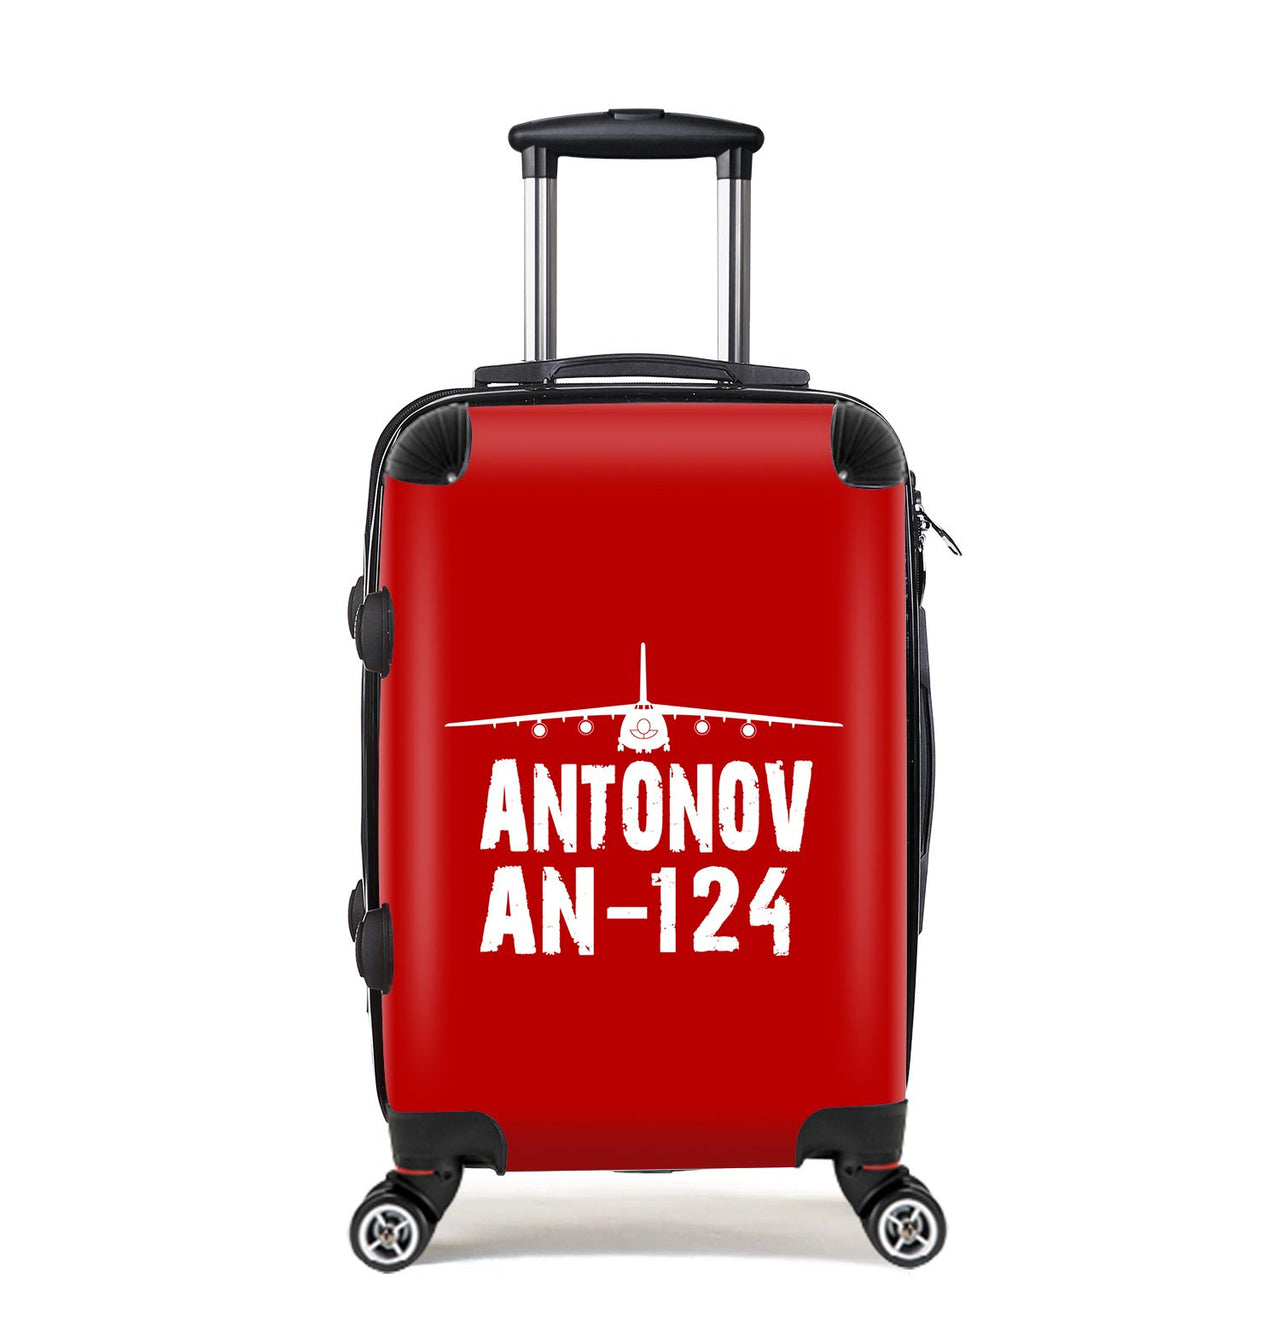 Antonov AN-124 & Plane Designed Cabin Size Luggages